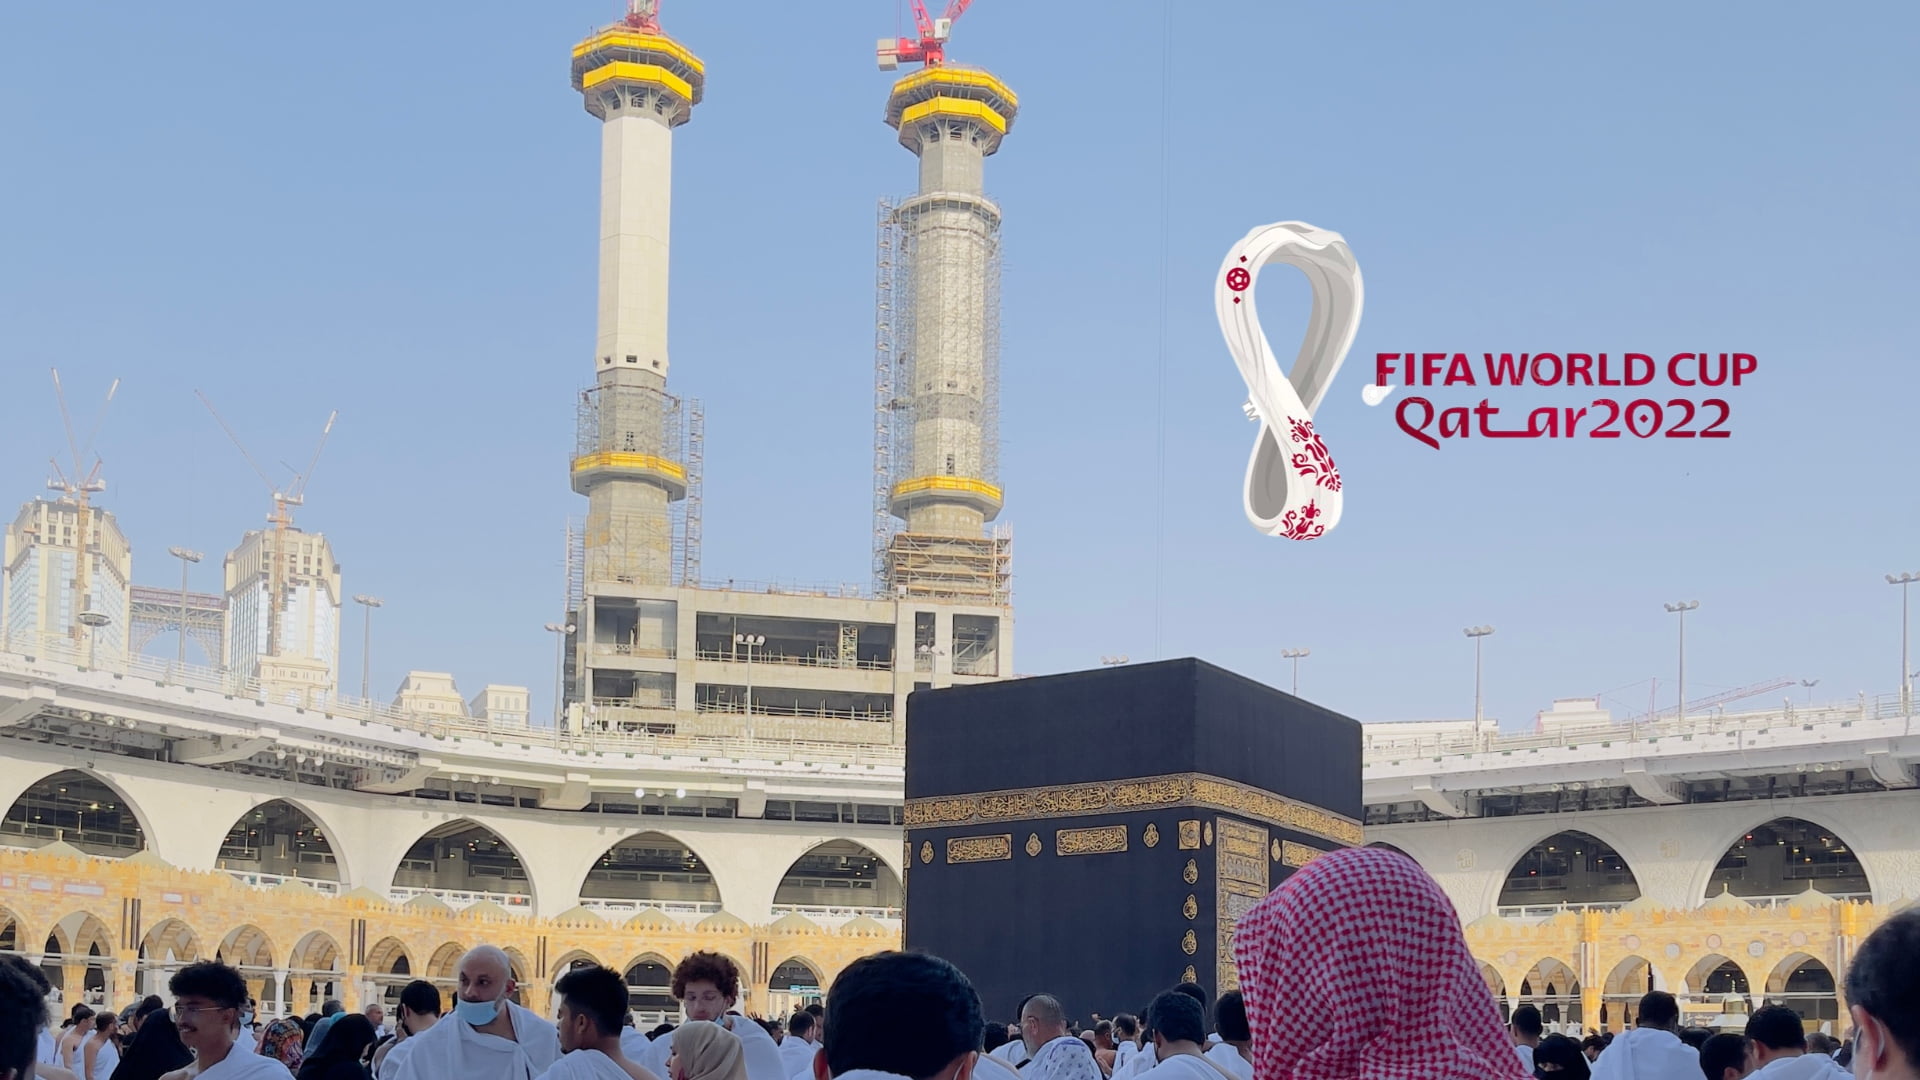 Saudi Arabia Gives Free Umrah Visas for Qatar 2022 World Cup Ticket Holders